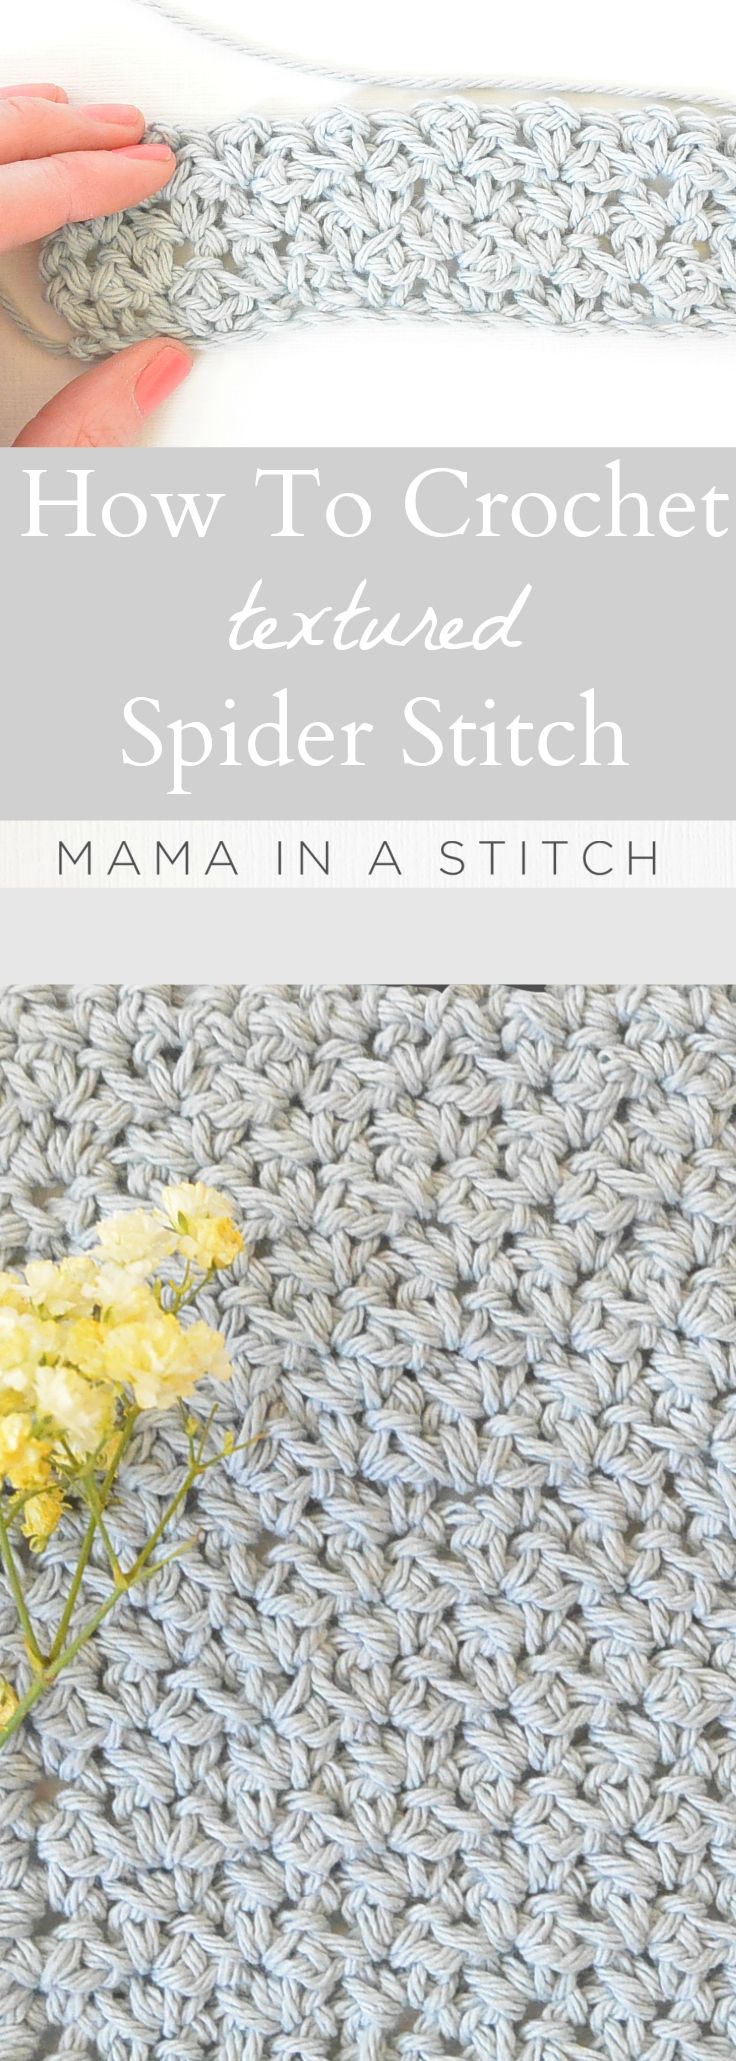 crochet spider stitch instructions